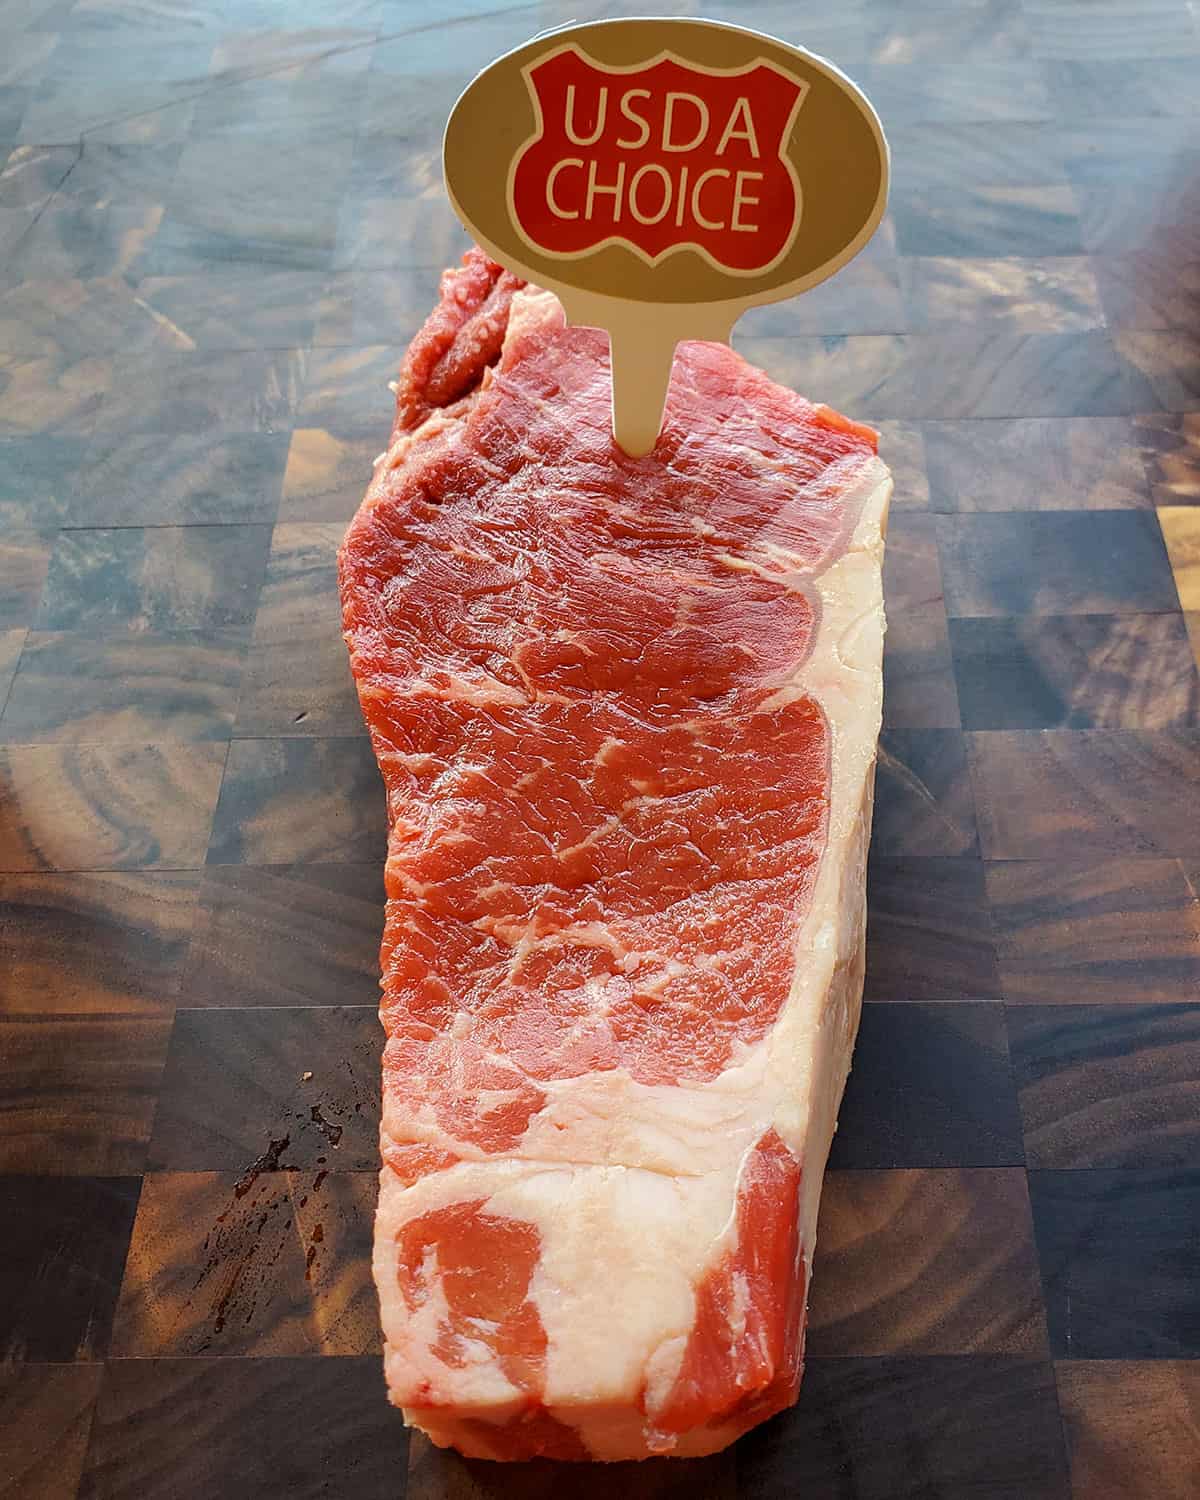 USDA graded choice steak with minimal marbling.